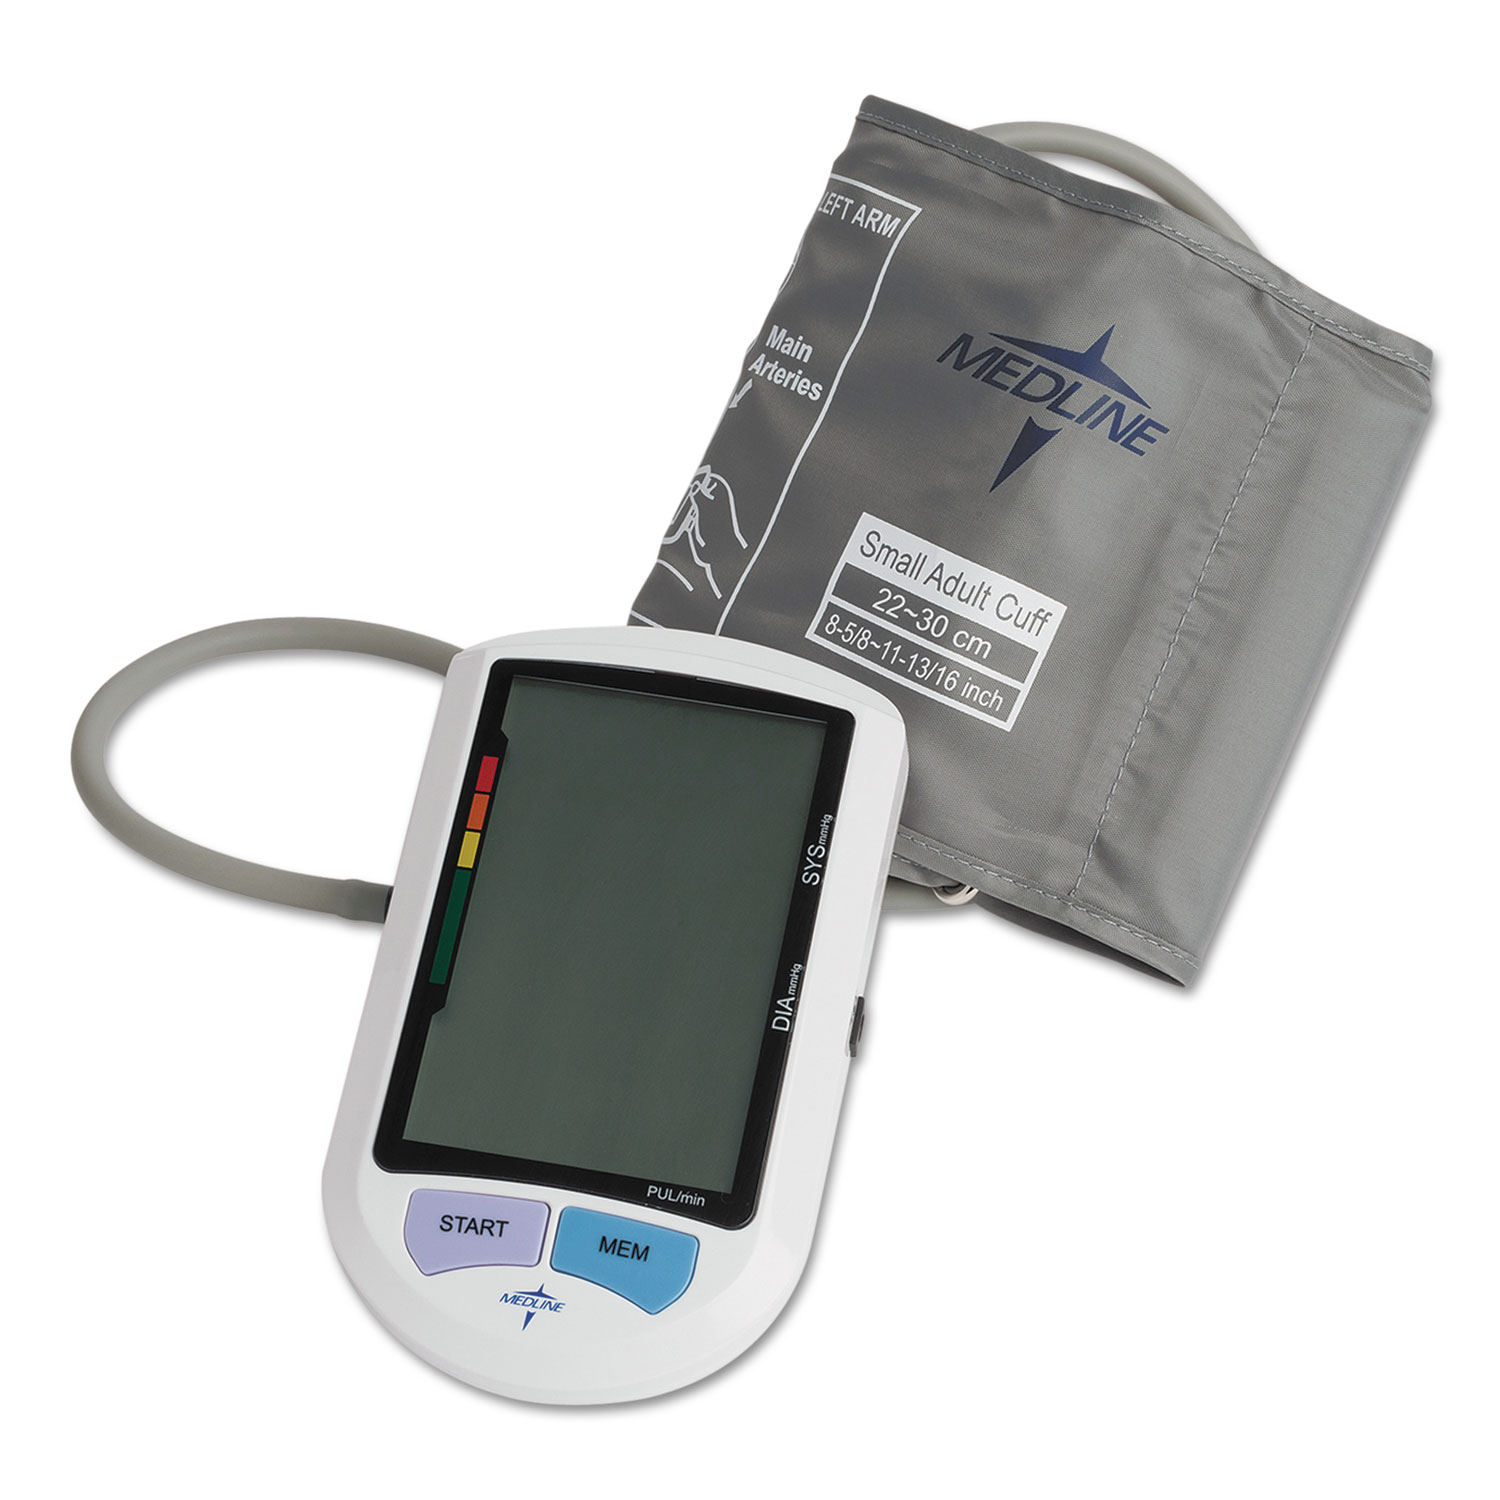  Medline MDS3001 Automatic Digital Upper Arm Blood Pressure Monitor, Small Adult Size (MIIMDS3001) 